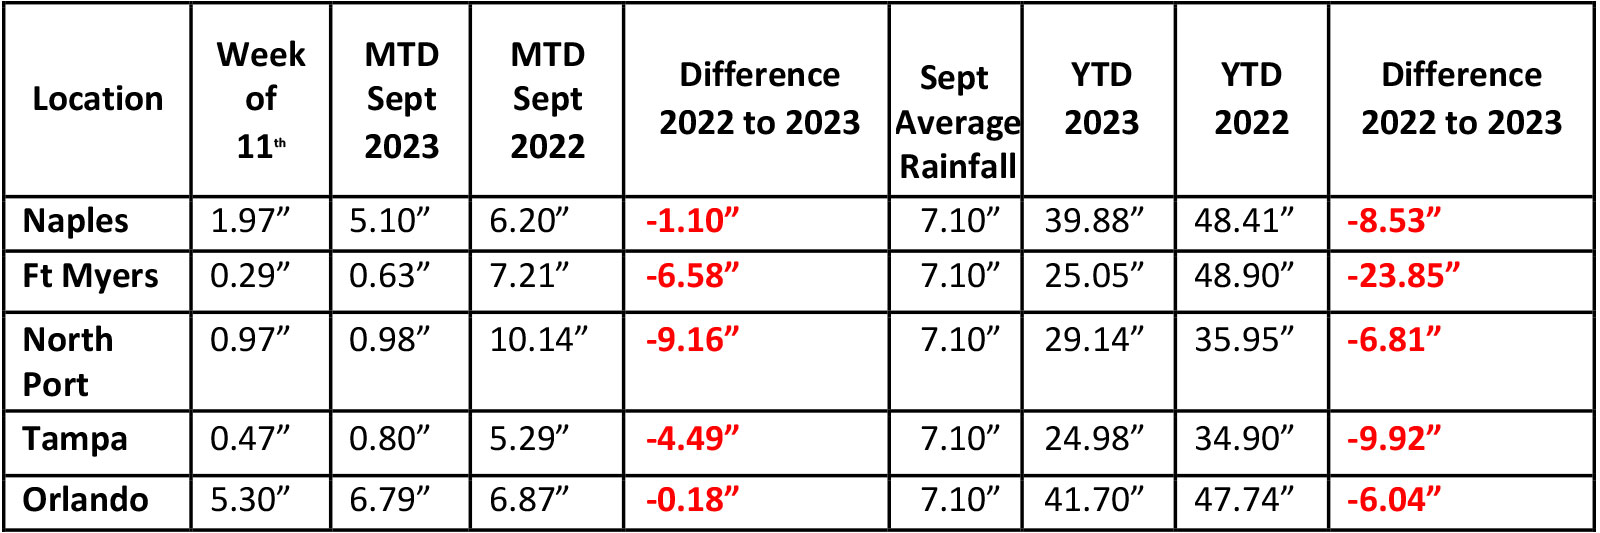 YTD rainfall table information